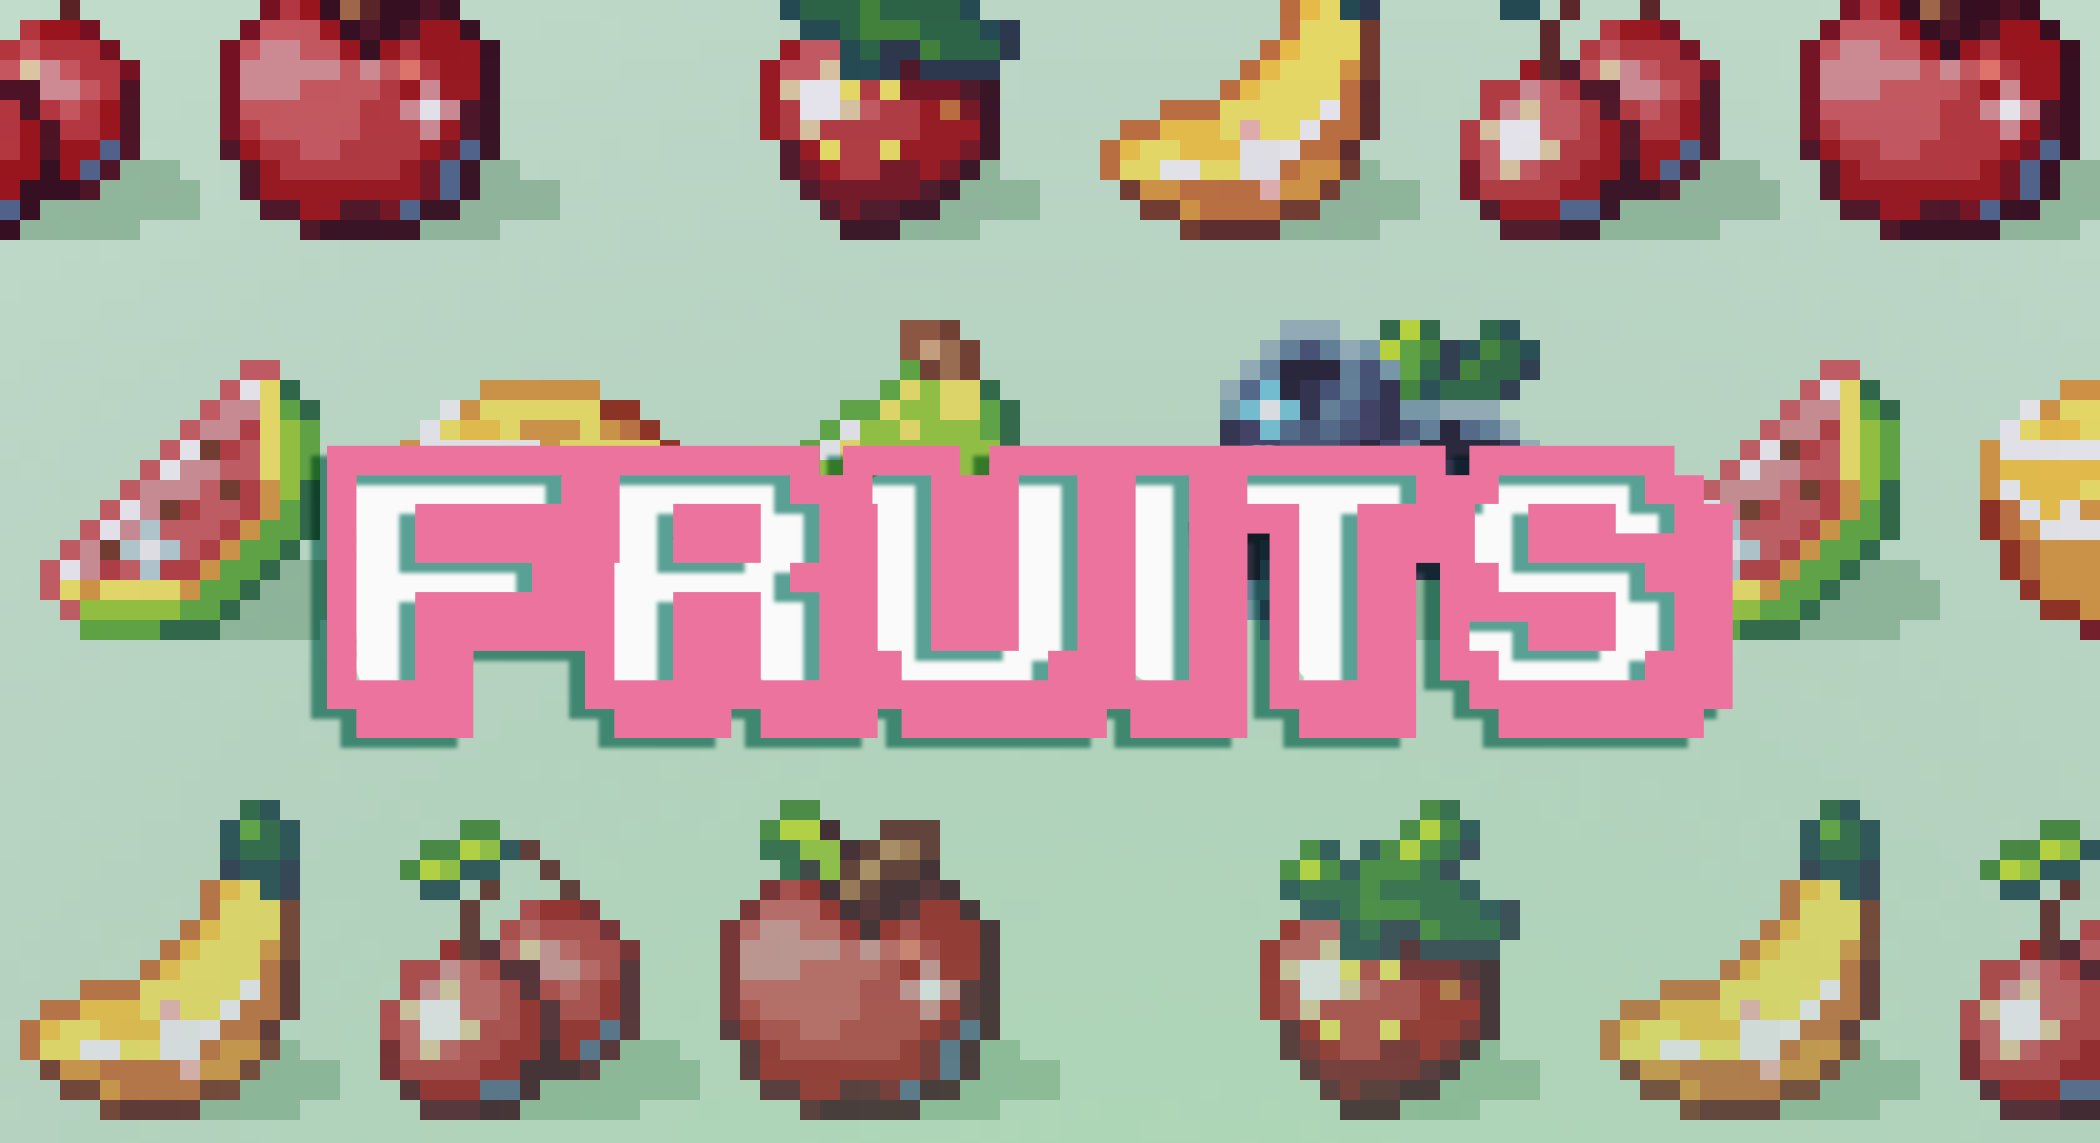 Tiny Fruit pixel sprite pack.